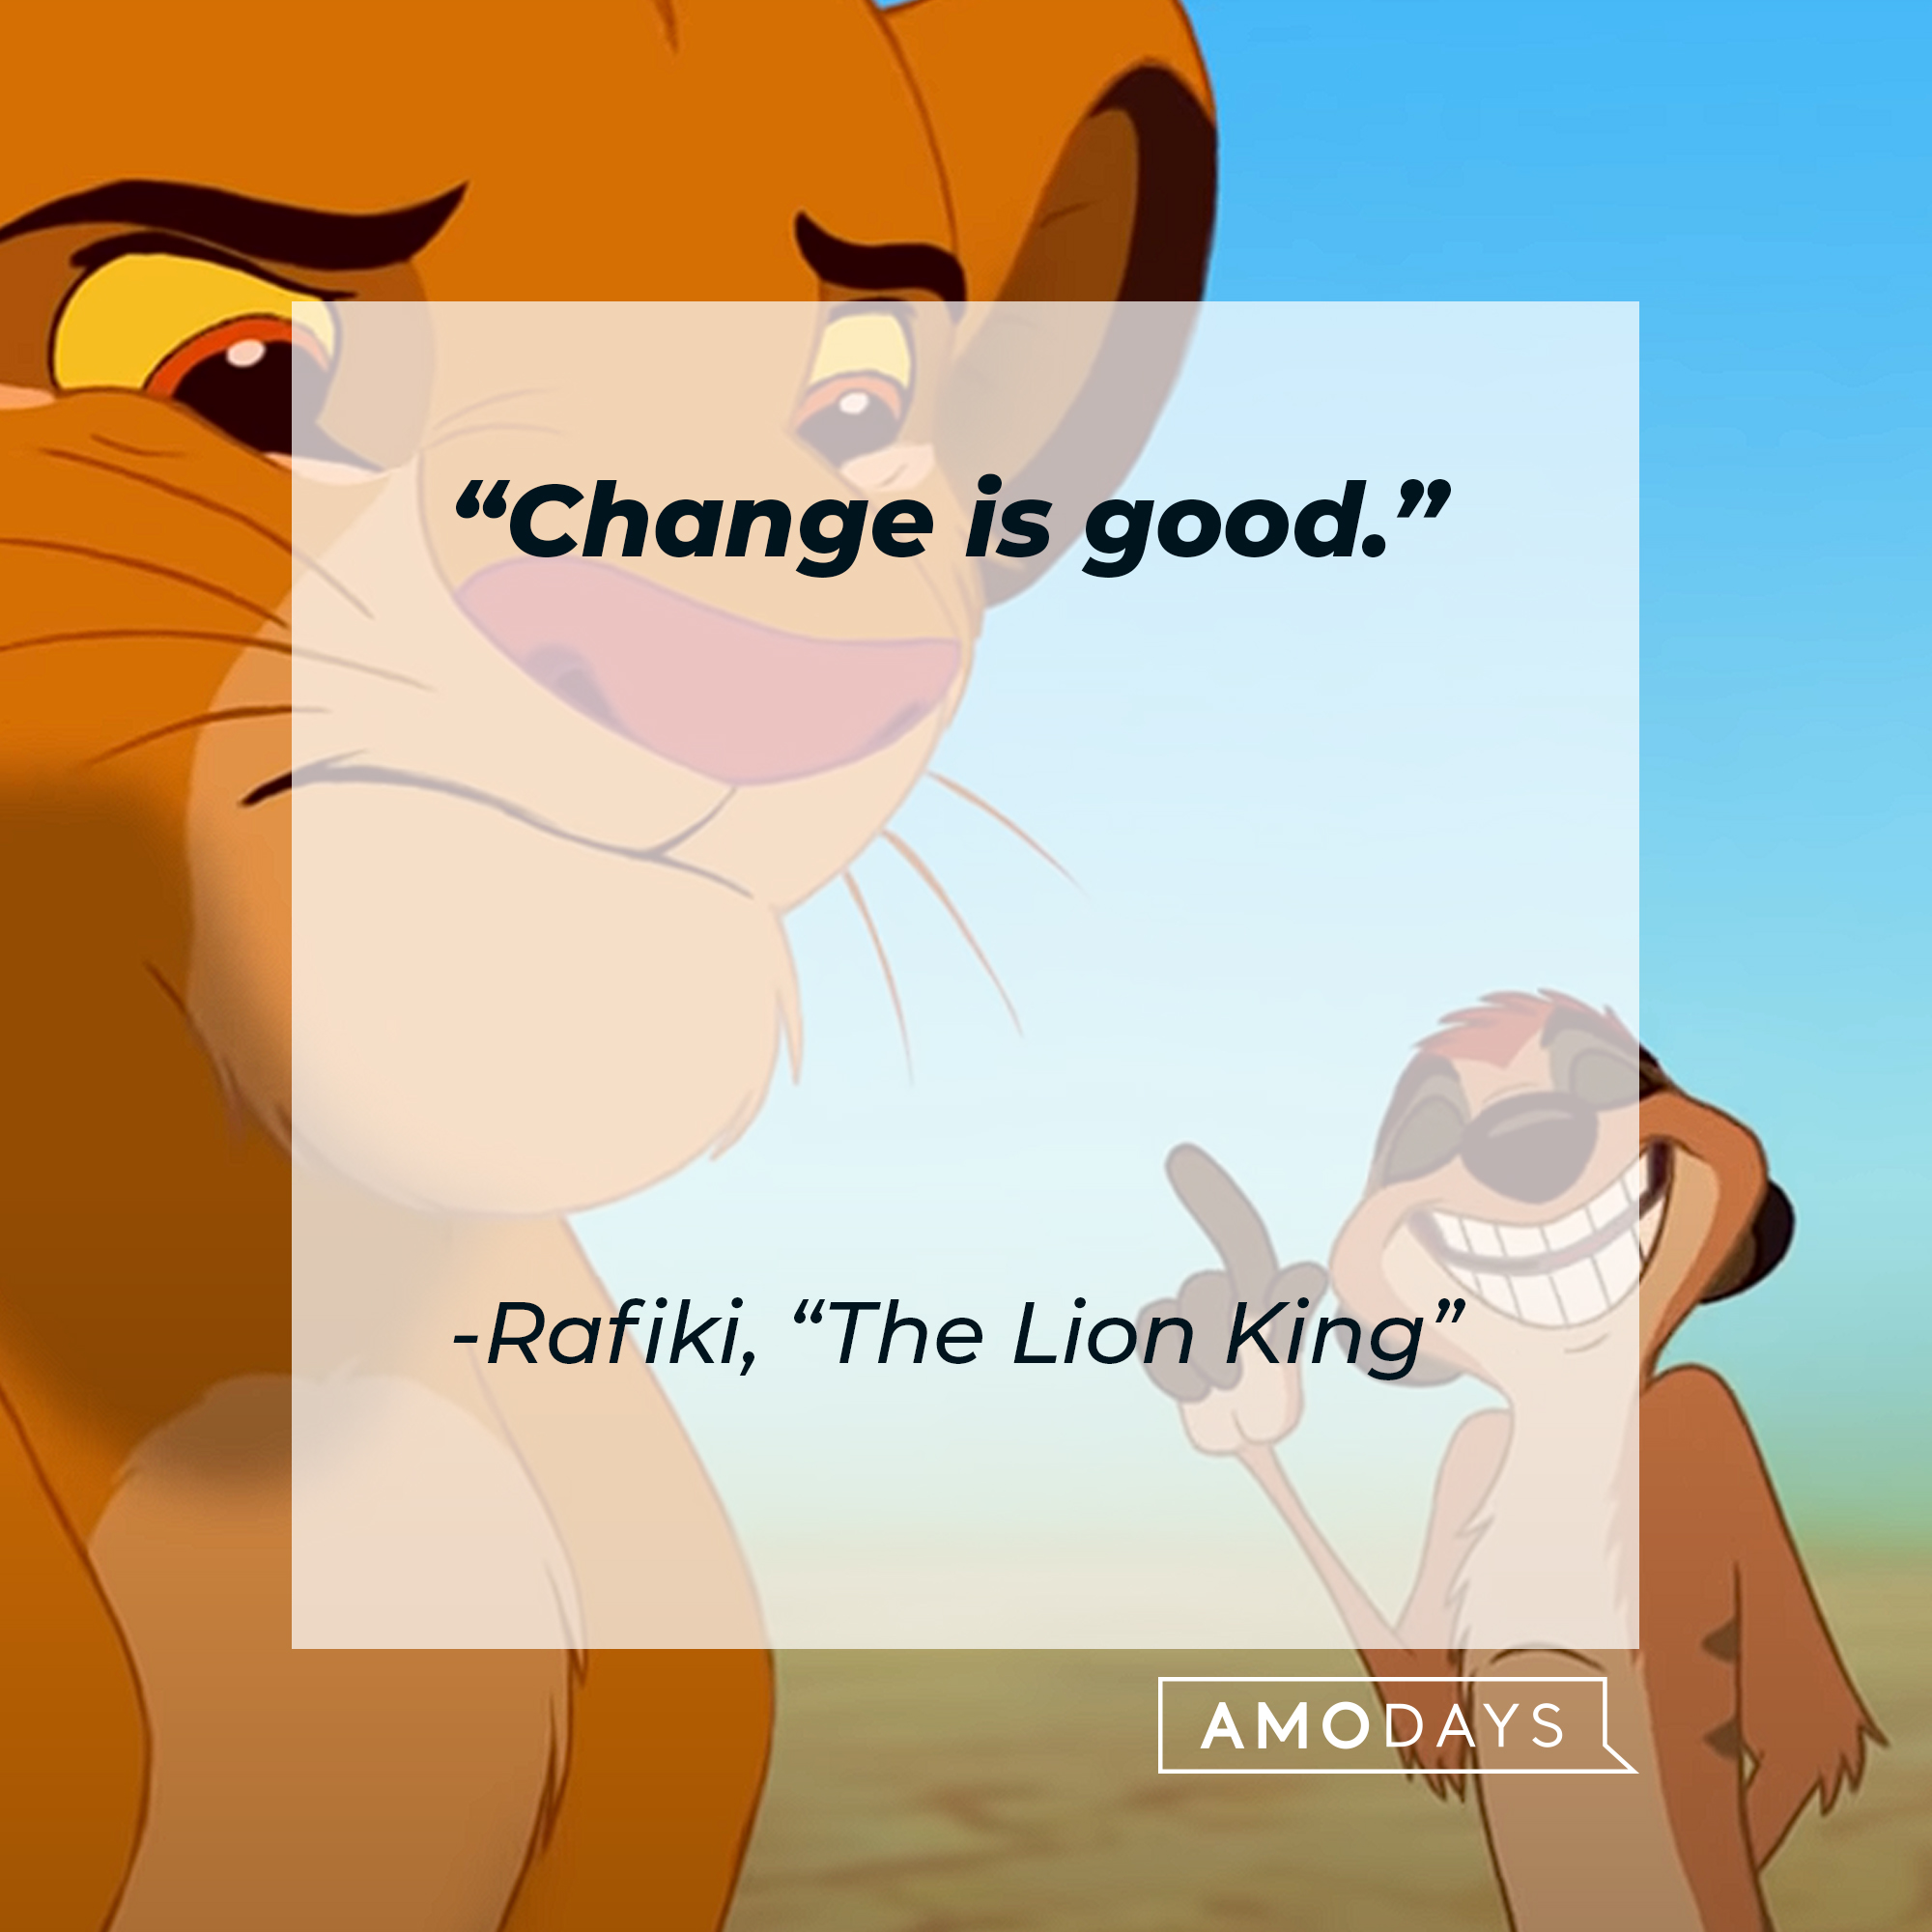 Rafiki's "The Lion King" quote: "Change is good." | Source: Youtube.com/disneyfr